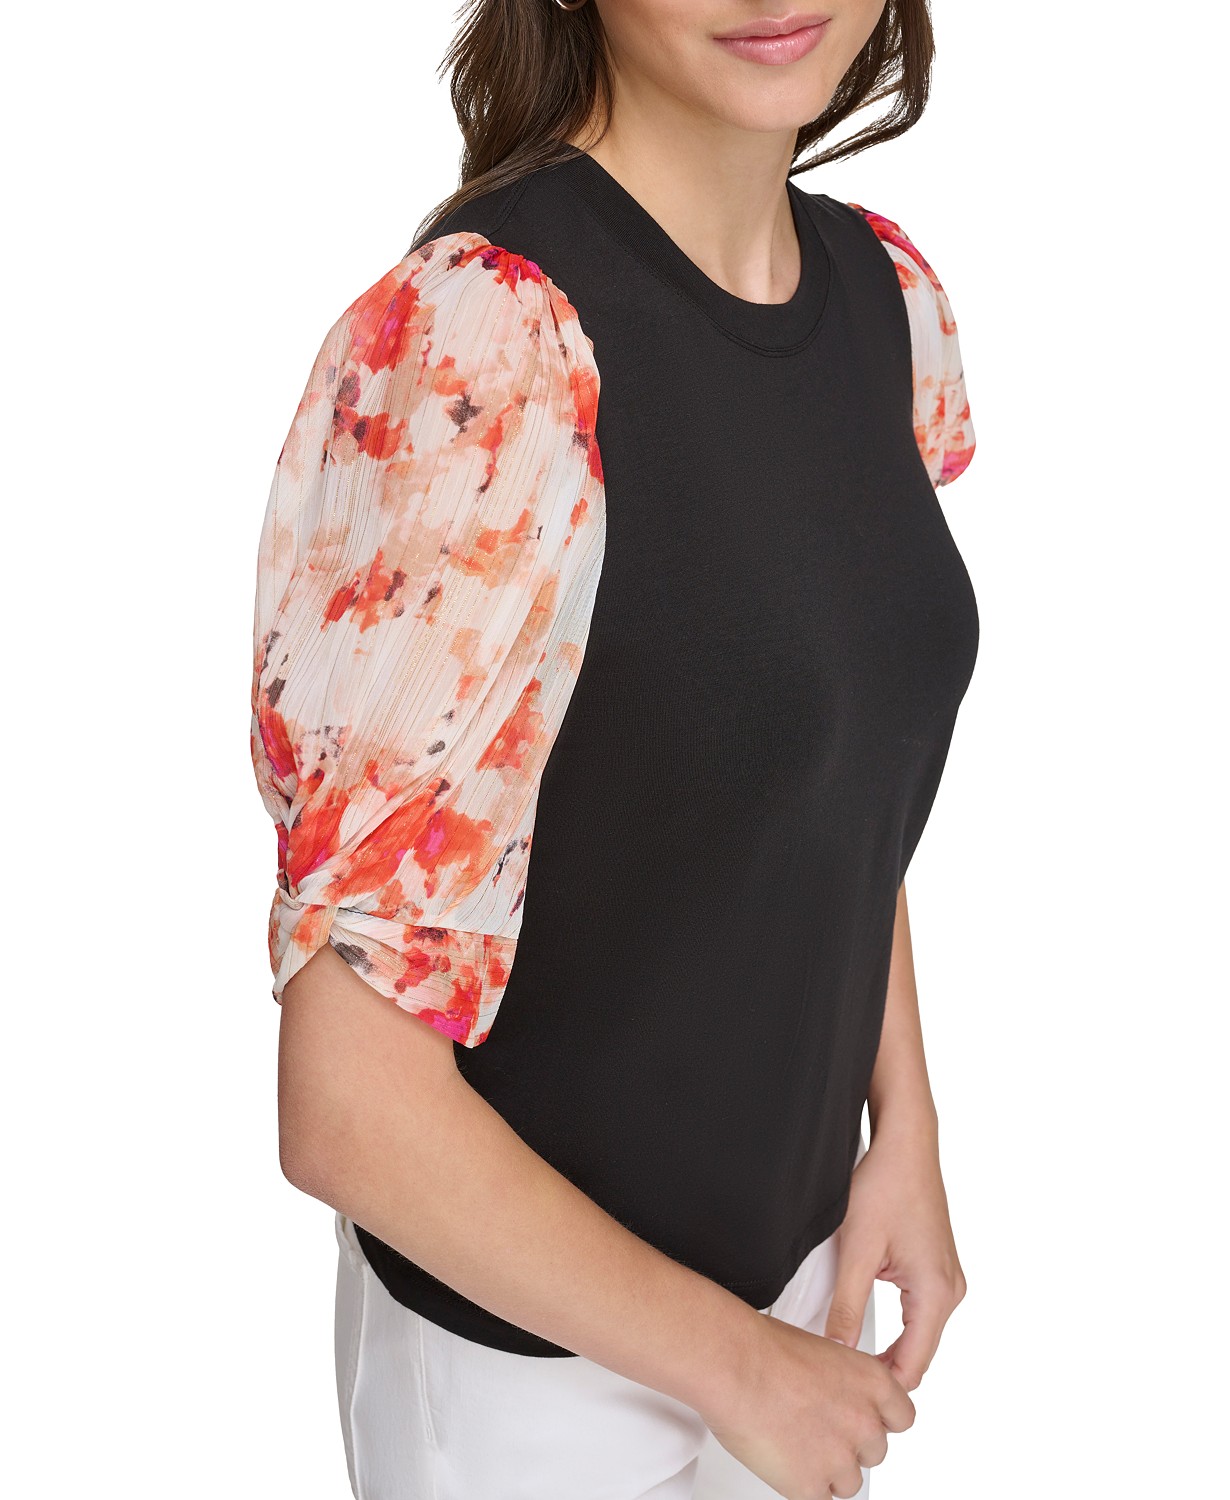 DKNY Womens Printed Chiffon-Sleeve Top